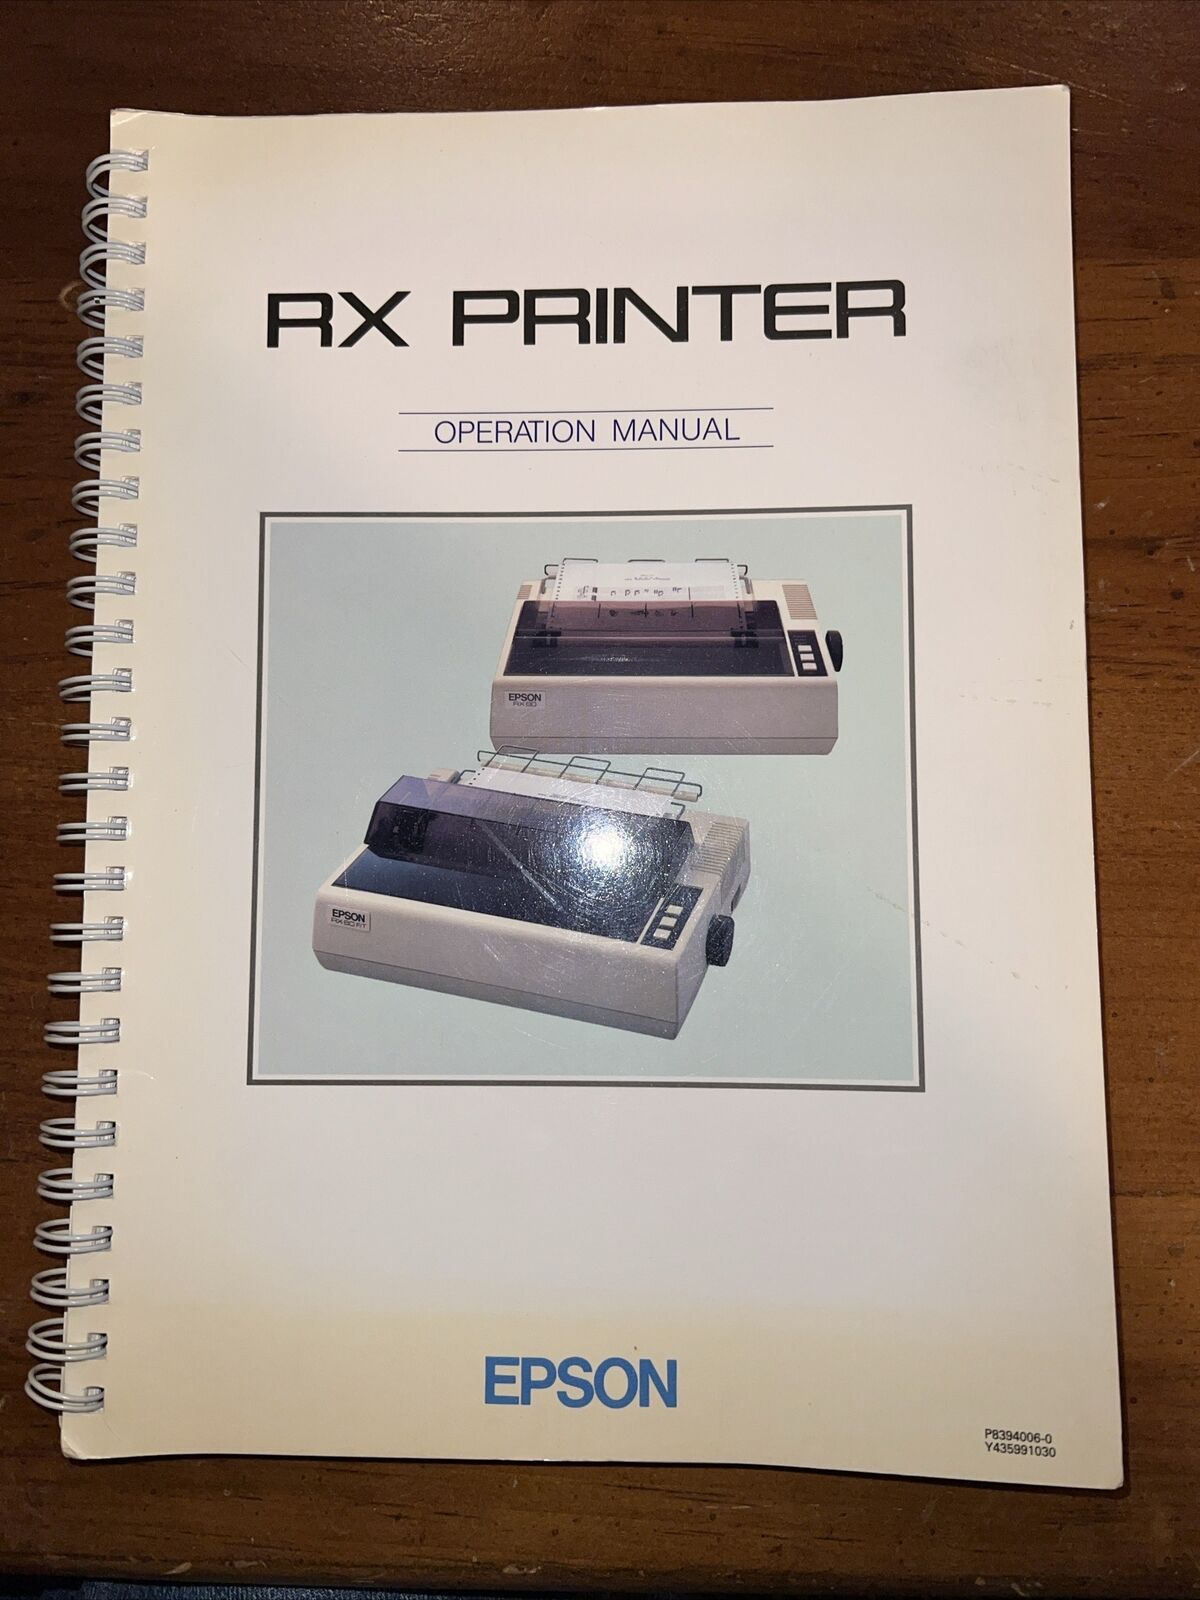 Vintage Epson RX-80 Printer User's Manual